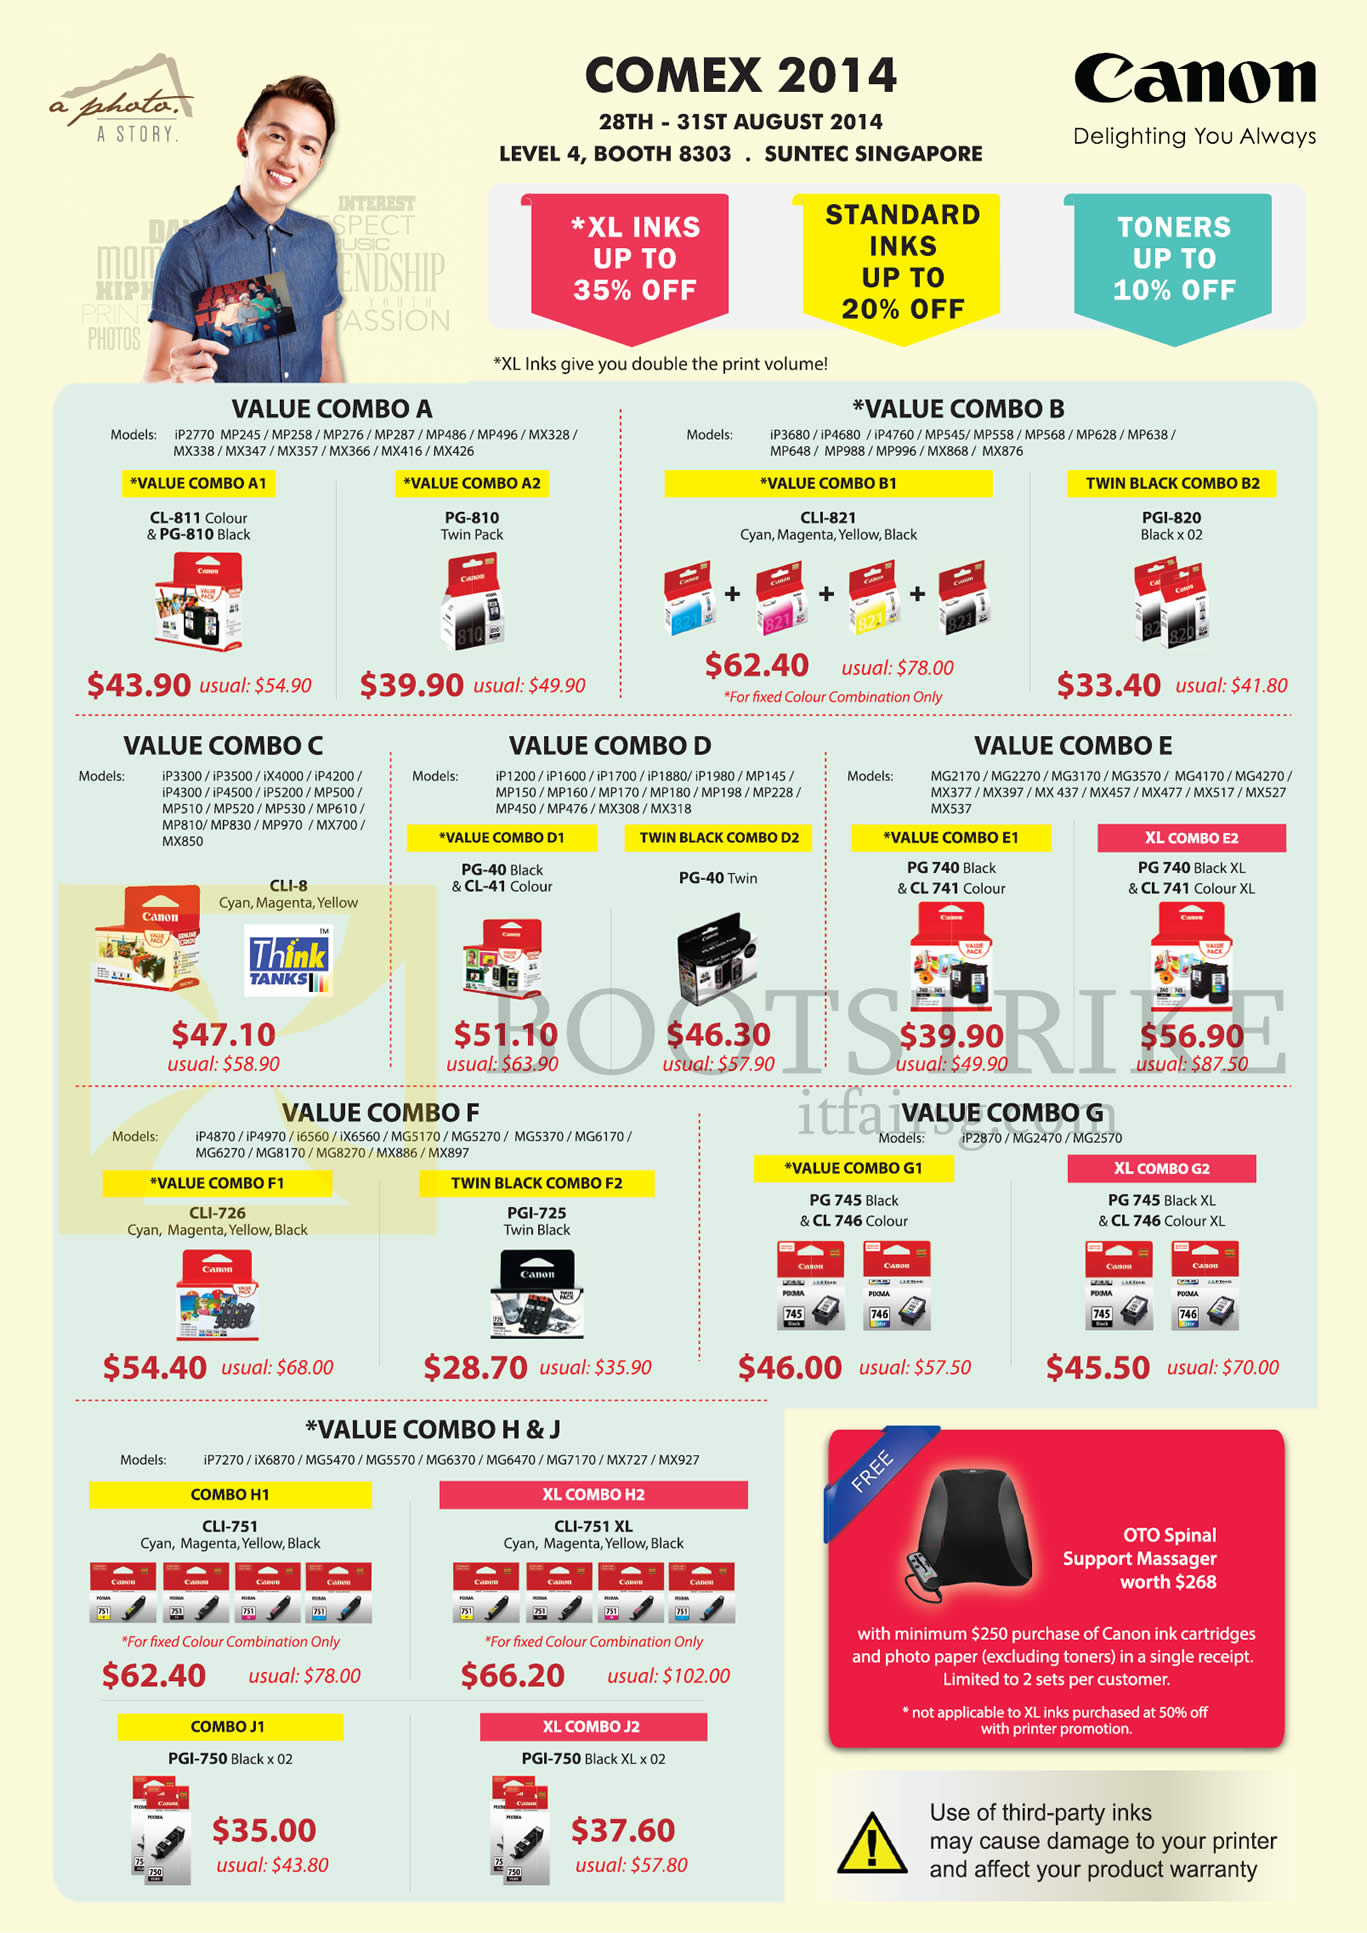 COMEX 2014 price list image brochure of Canon Ink Cartridges Bundles